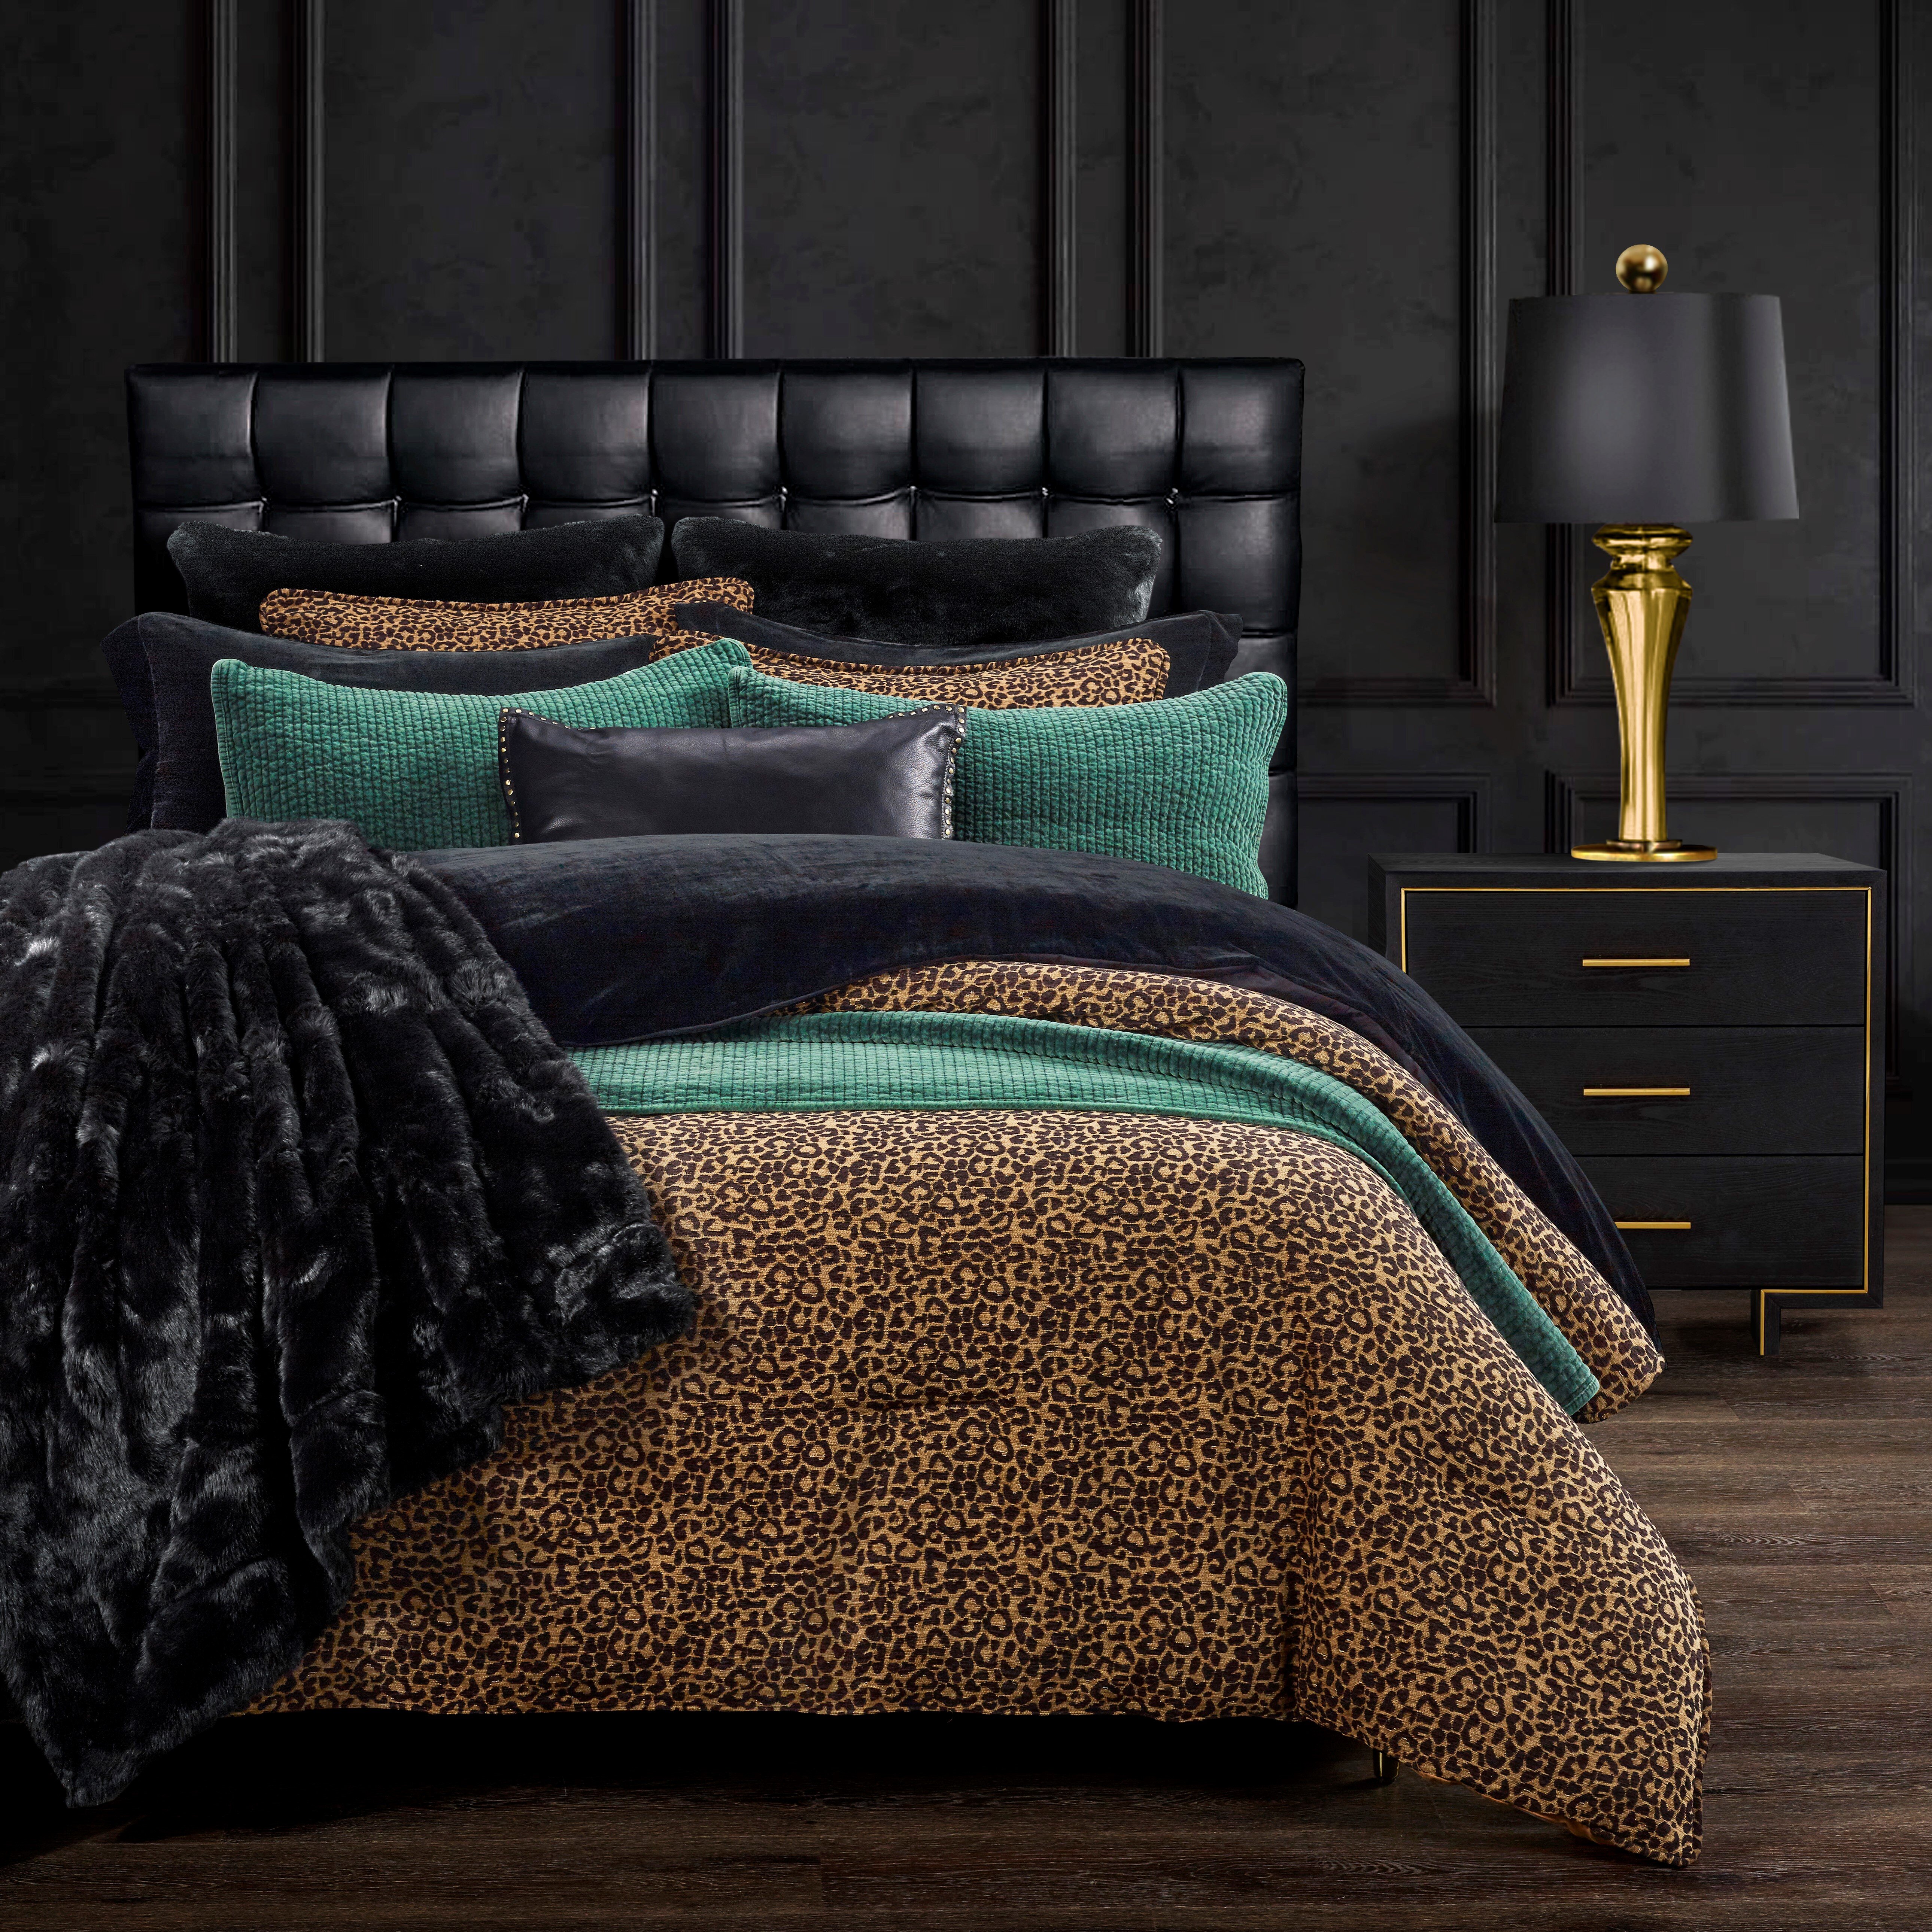  Juicy Couture Leopard Jacquard Throw Blanket - Beige